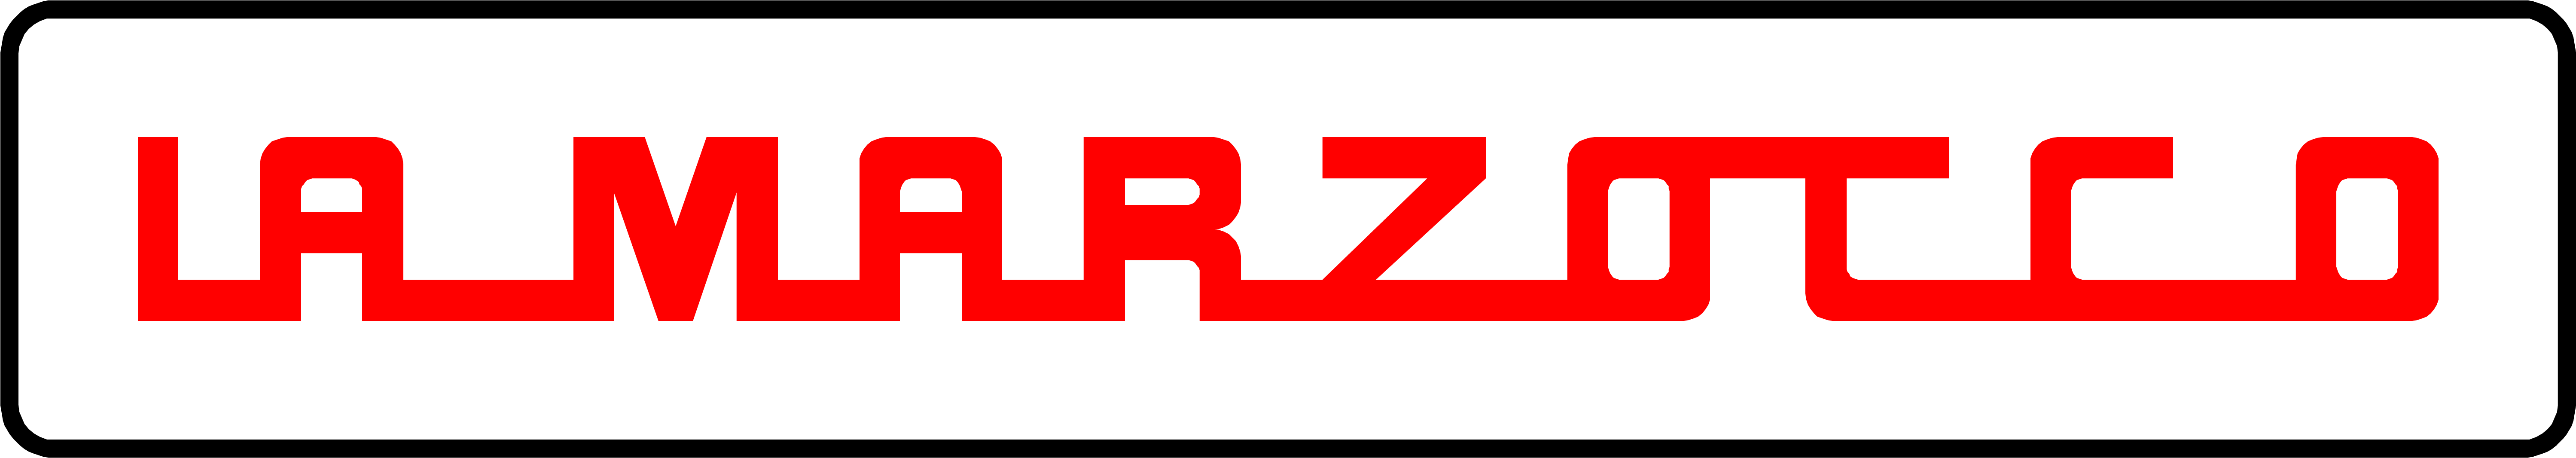 Ngt kz. La Marzocco logo. La Marzocco логотип. Кофемашина логотип. La Marzocco 80 логотип.